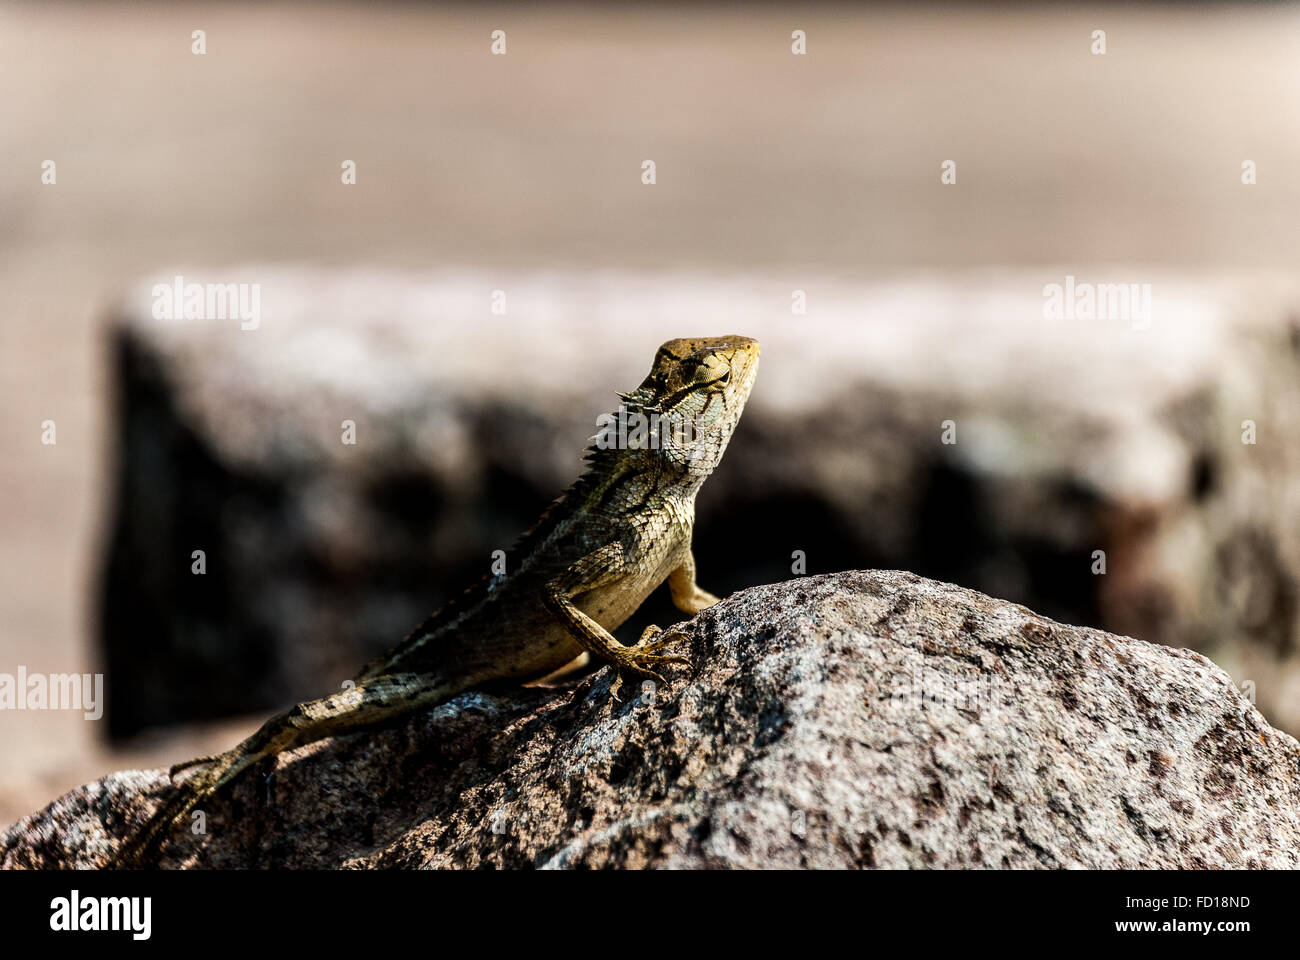 Giardino in comune lizard Foto Stock